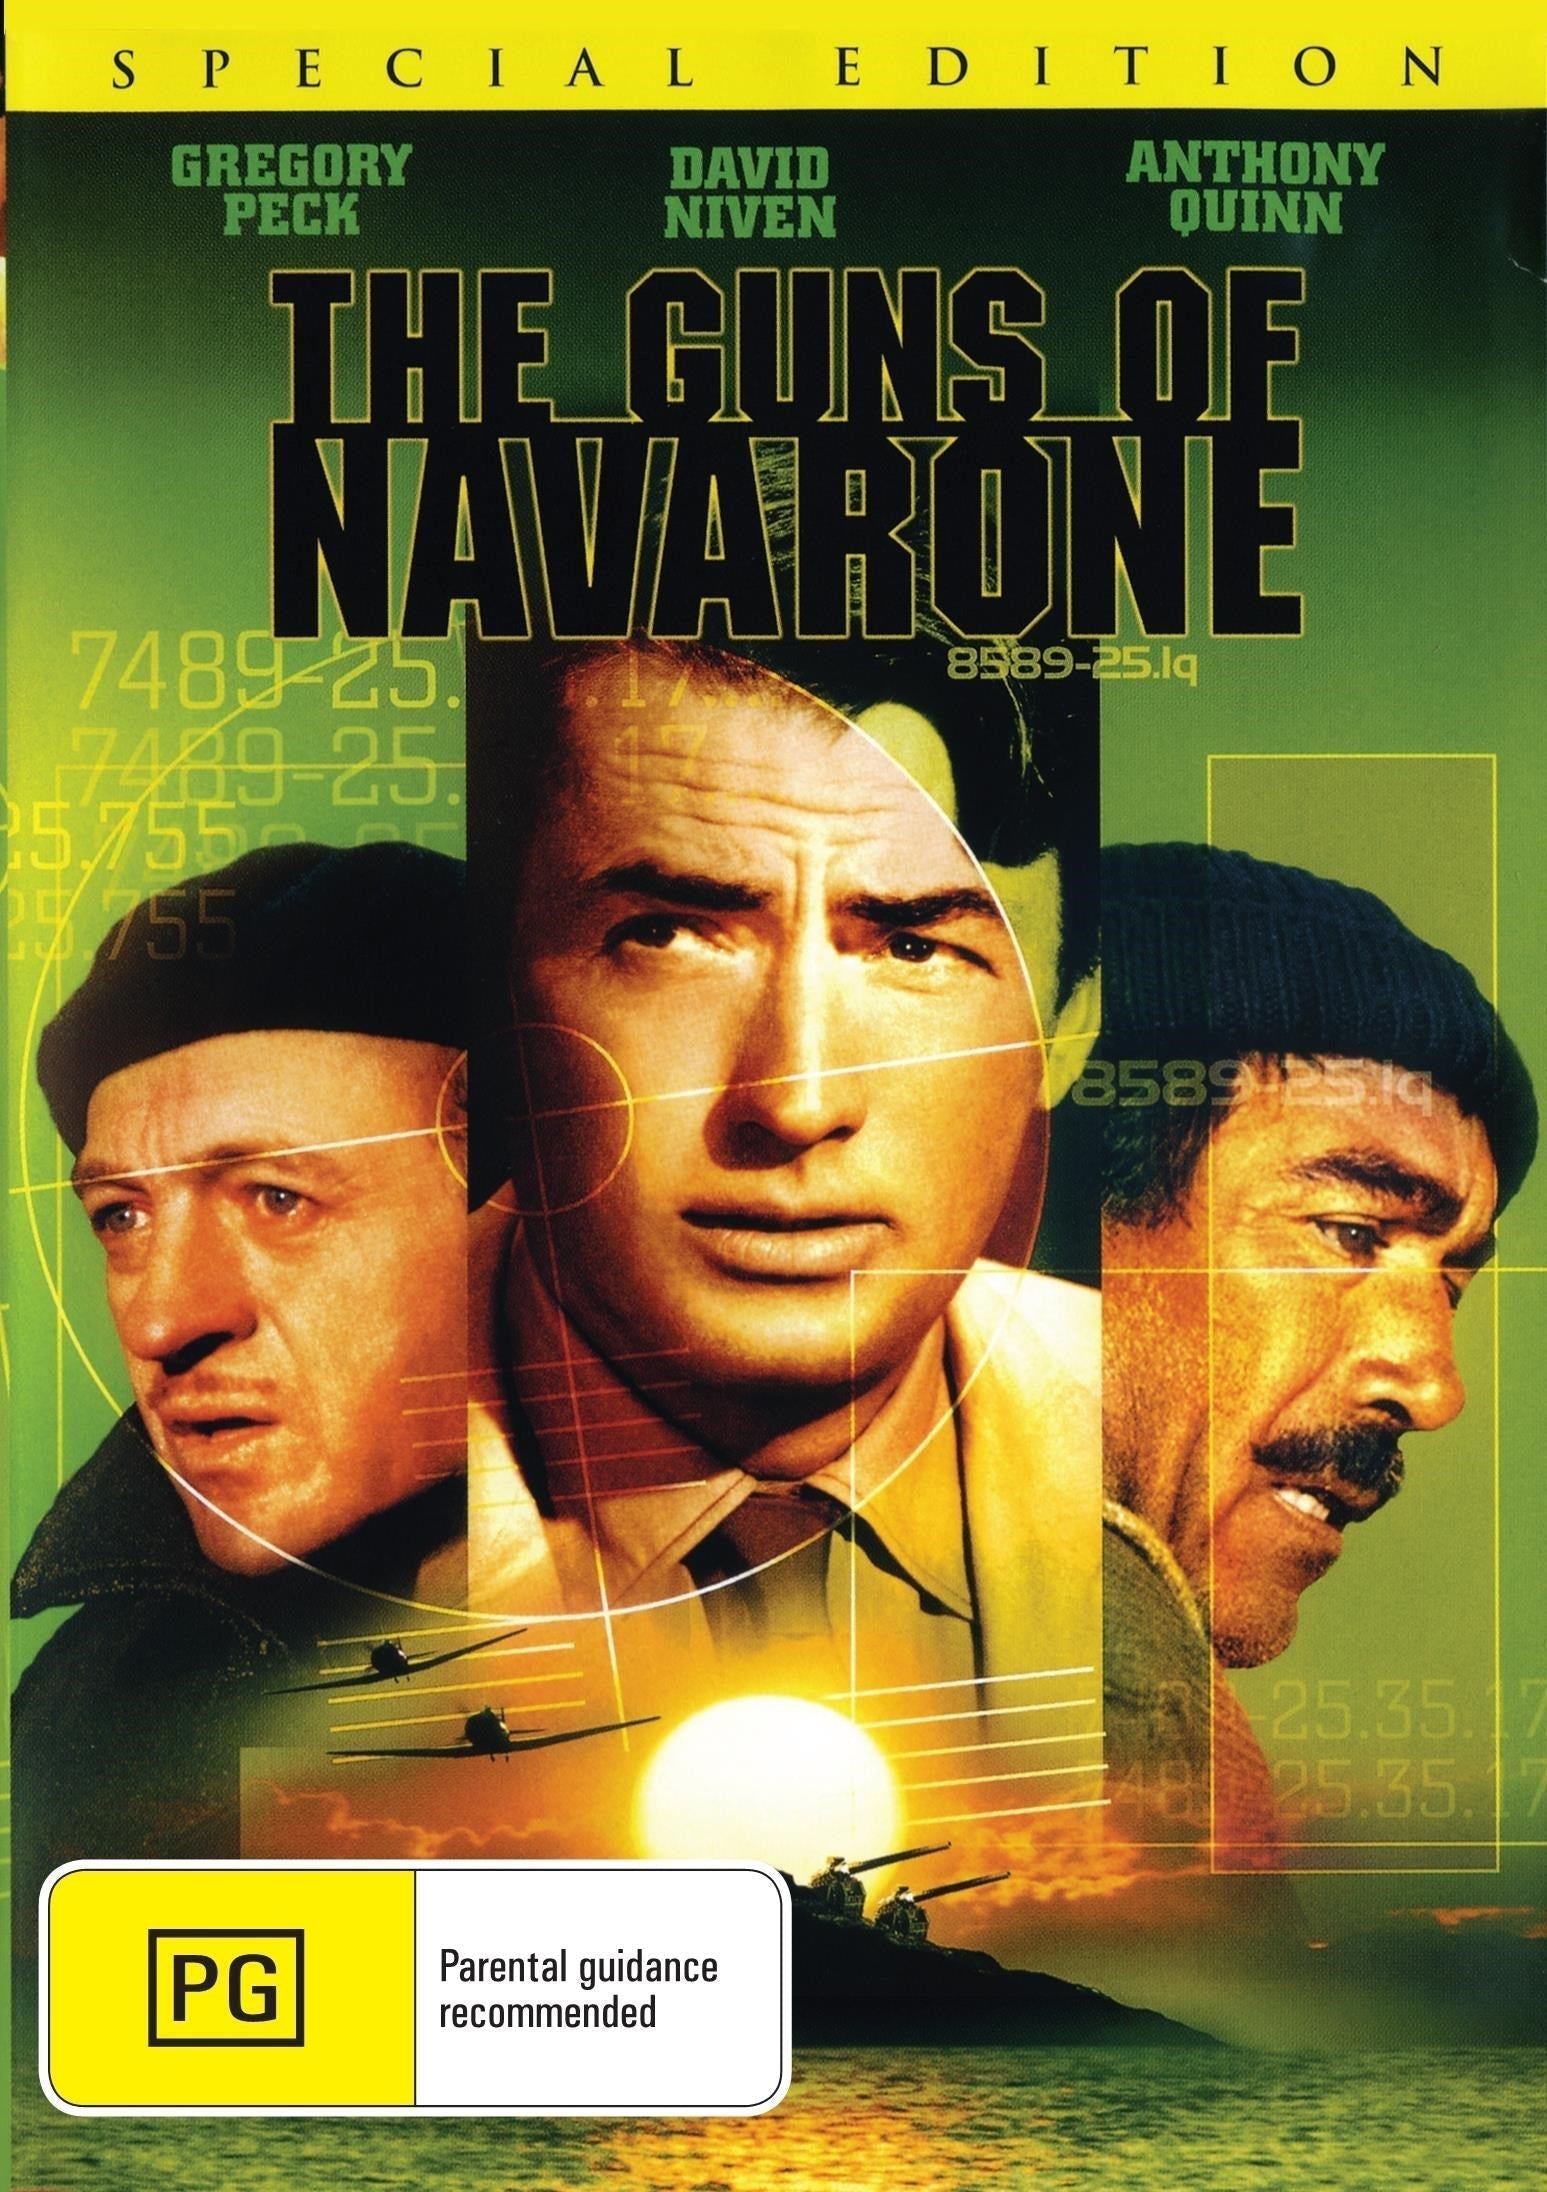 The Guns of Navarone rareandcollectibledvds